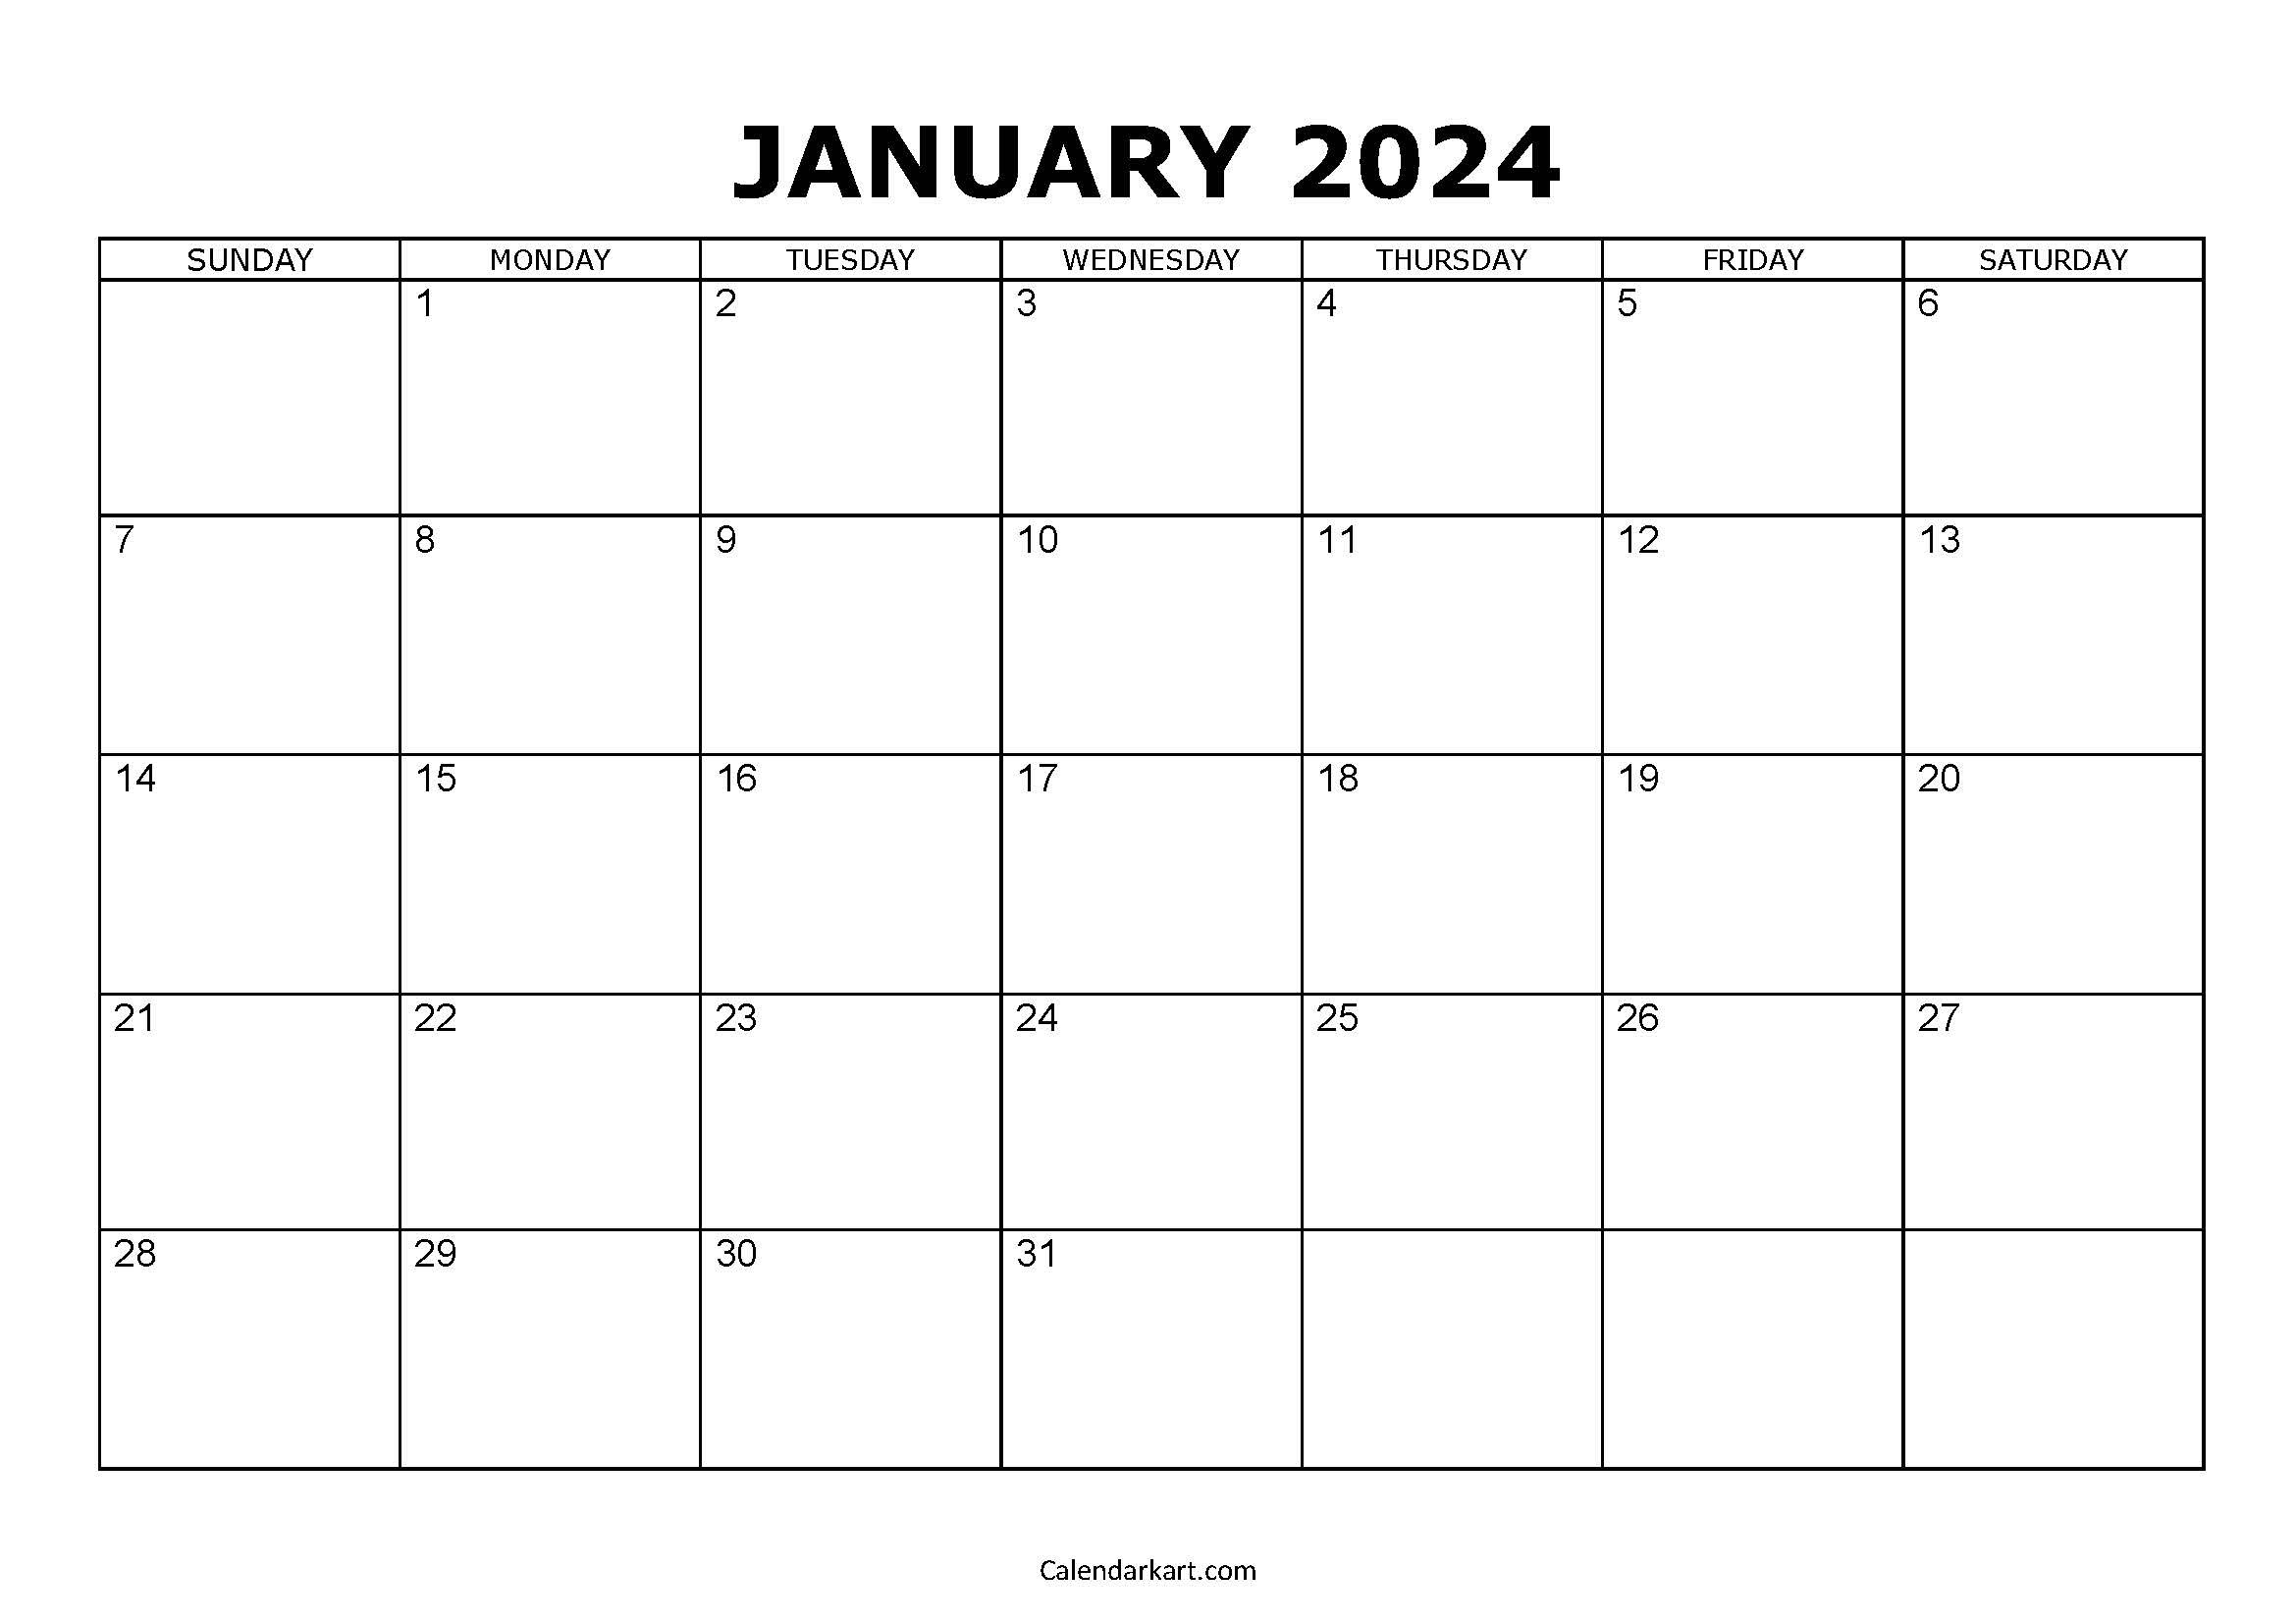 Free Printable January 2024 Calendars - Calendarkart intended for Free Printable Calendar 2024 Grid